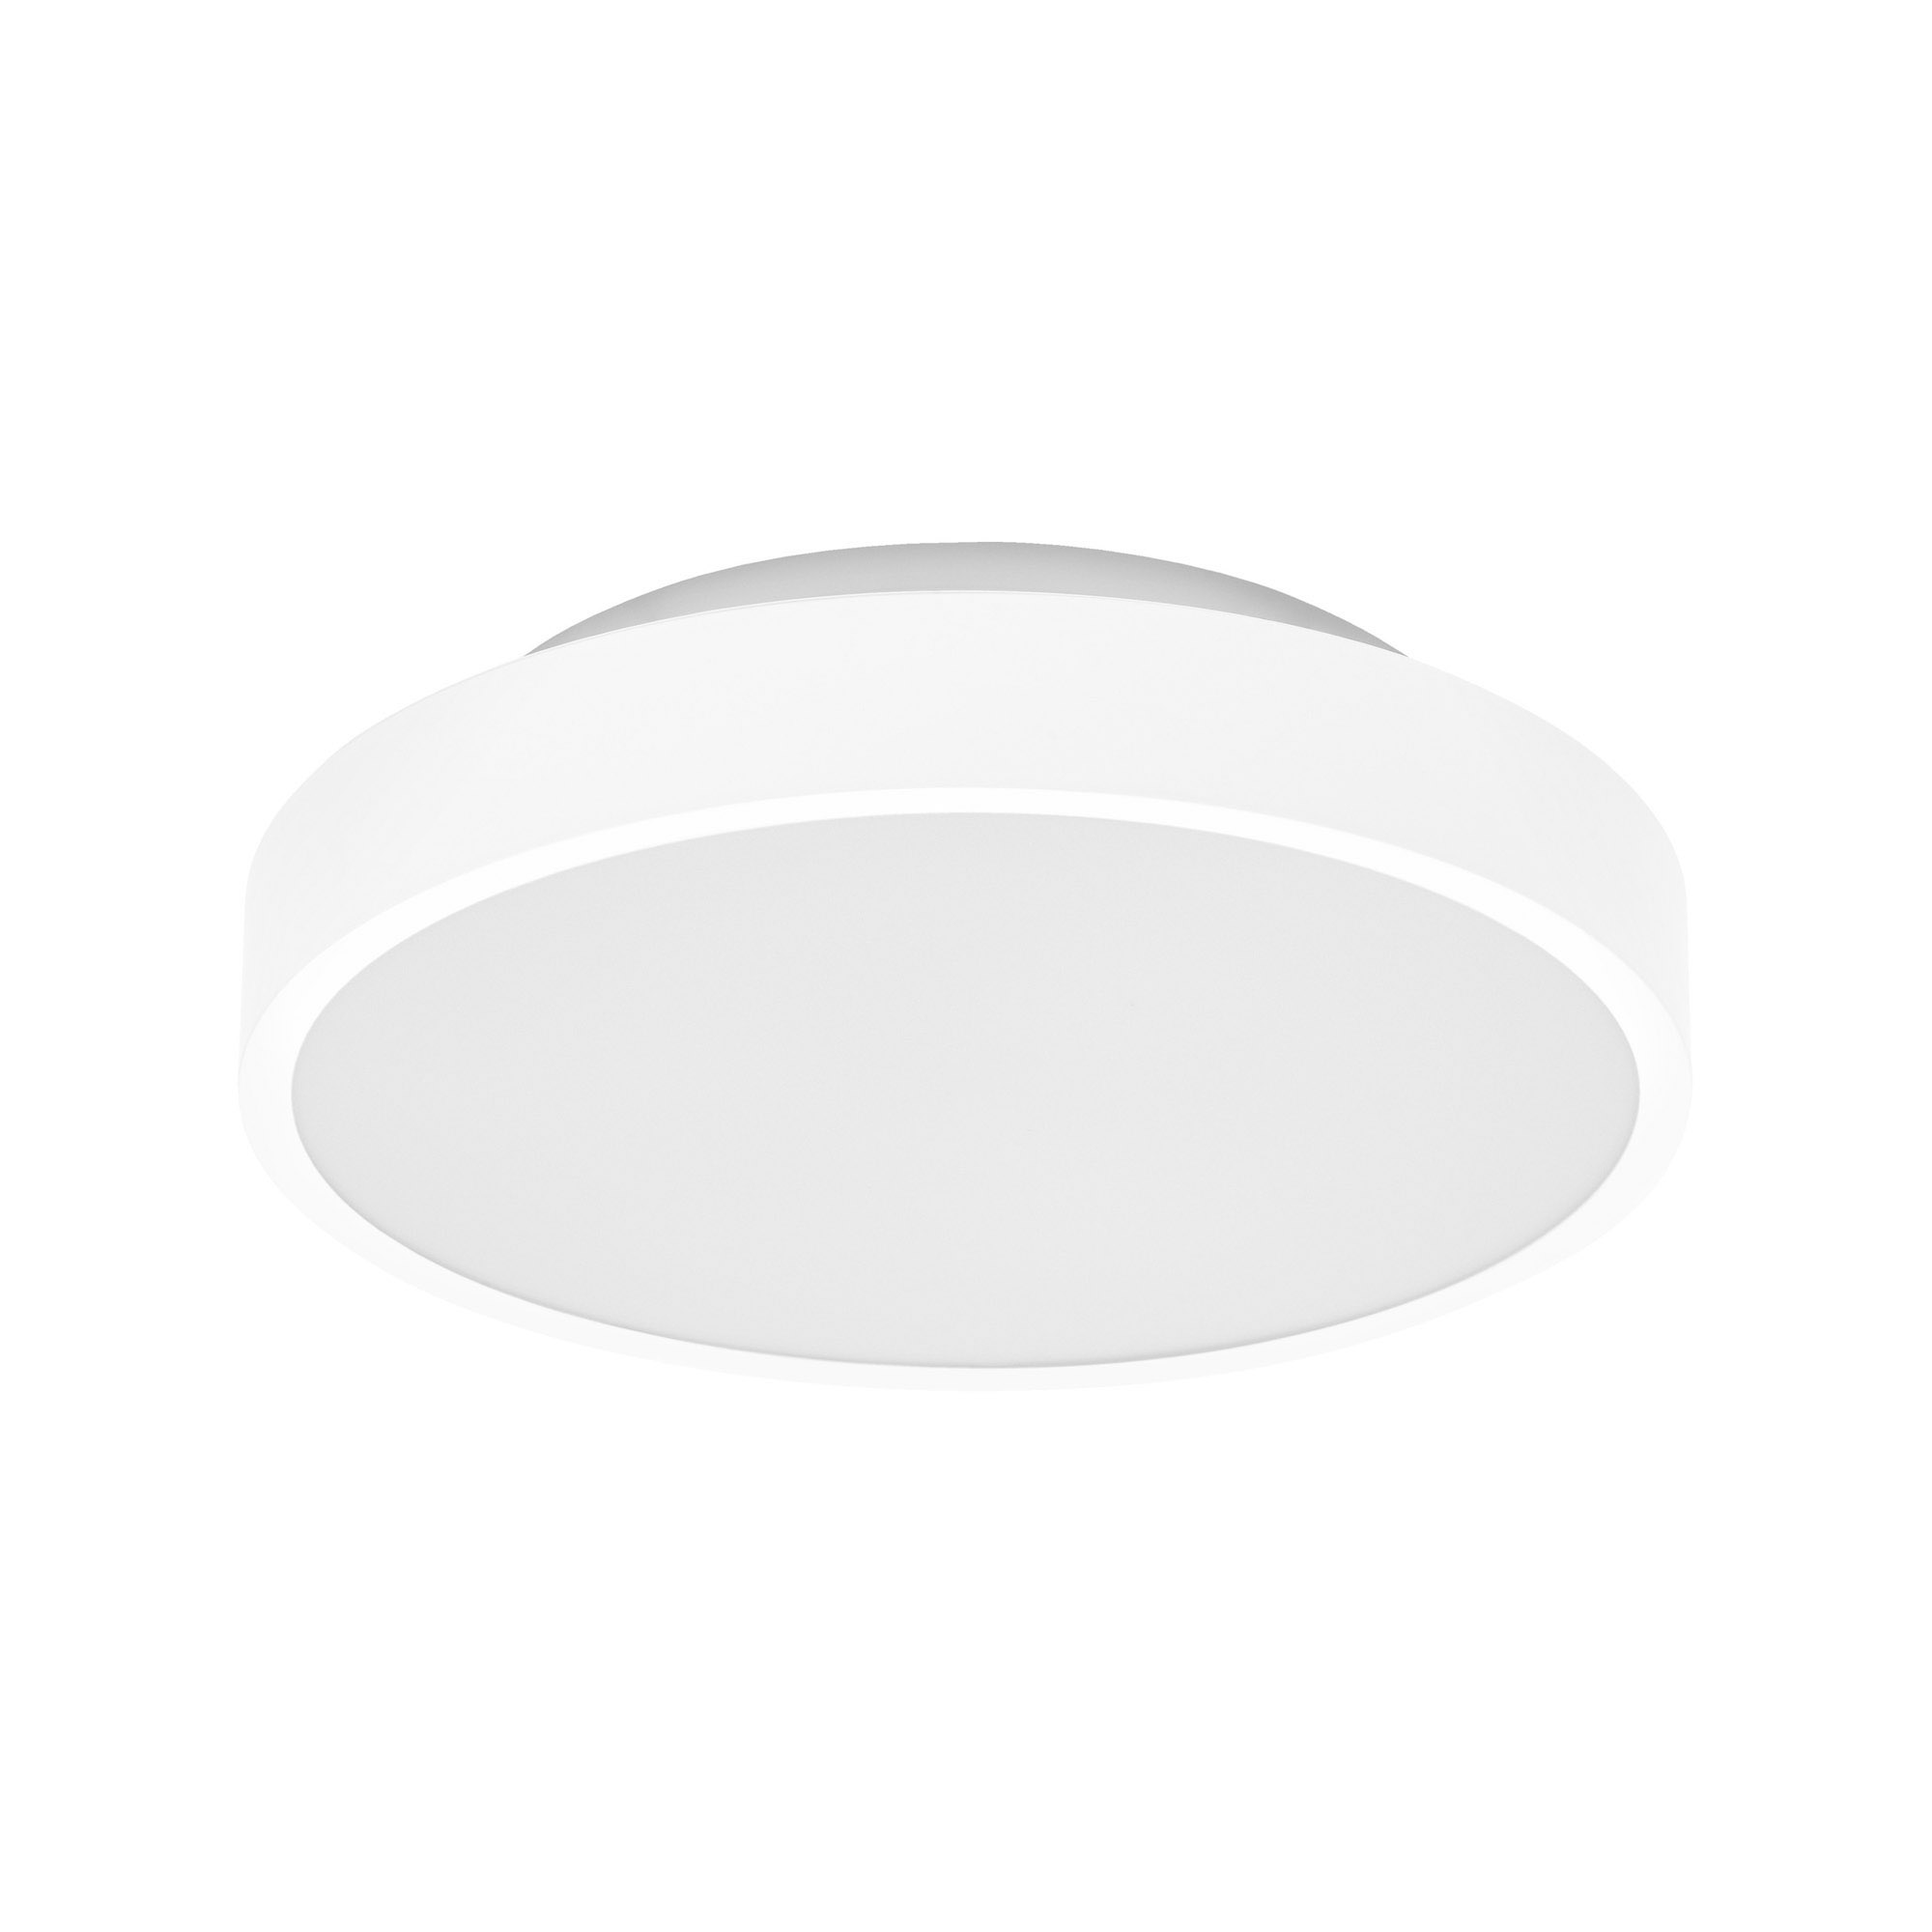 LEDVANCE SMART+ WiFi Tunable White RGB LED Ceiling Light ORBIS Backlight 350mm white 2400lm